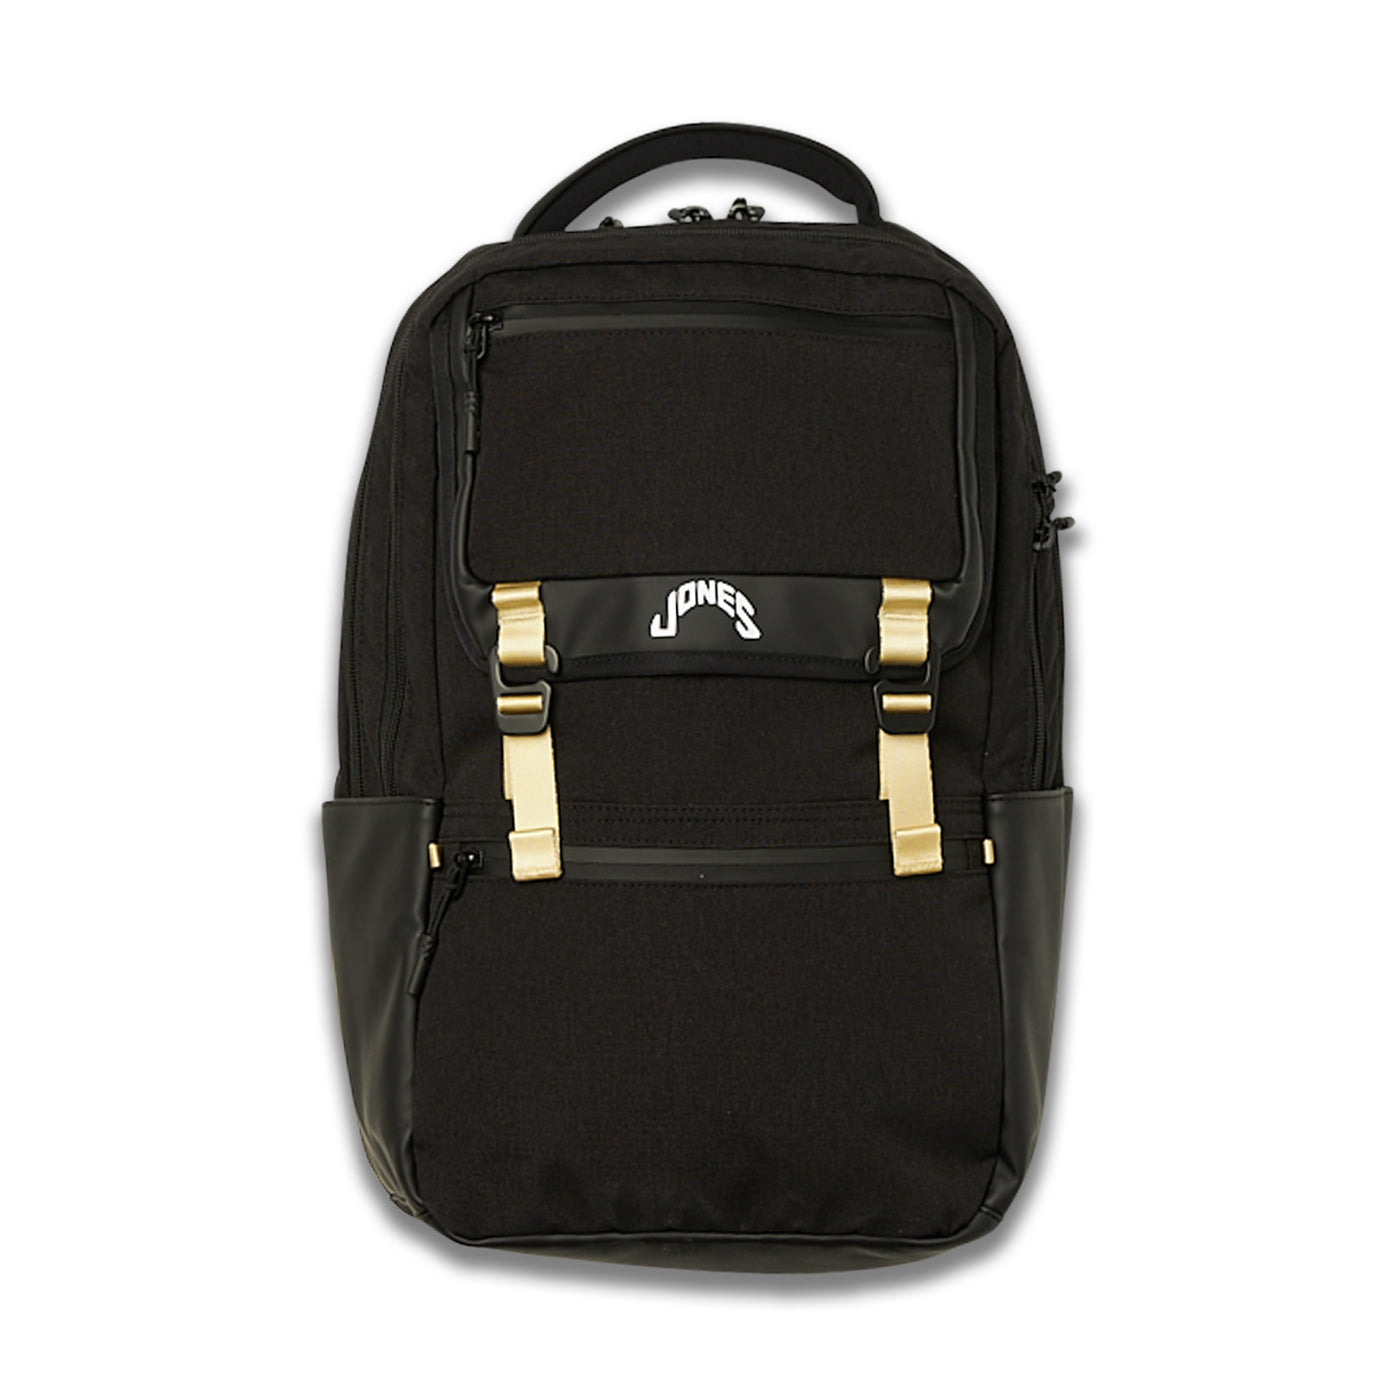 A2 Backpack R - Black